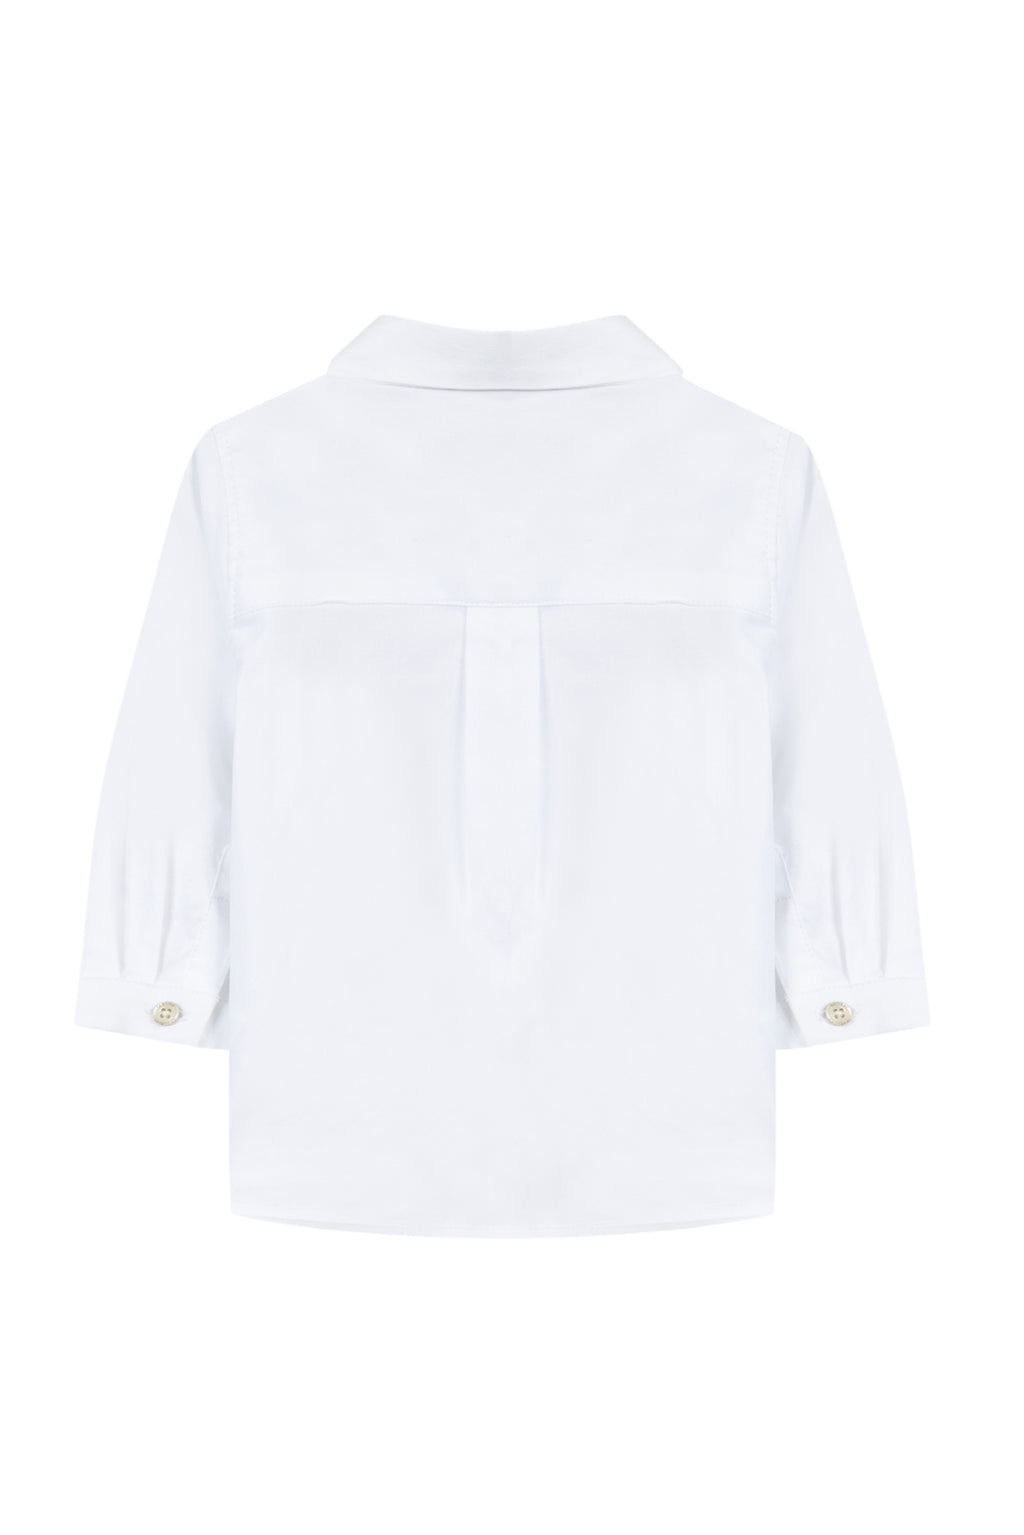 Shirt - White Poplin cotton